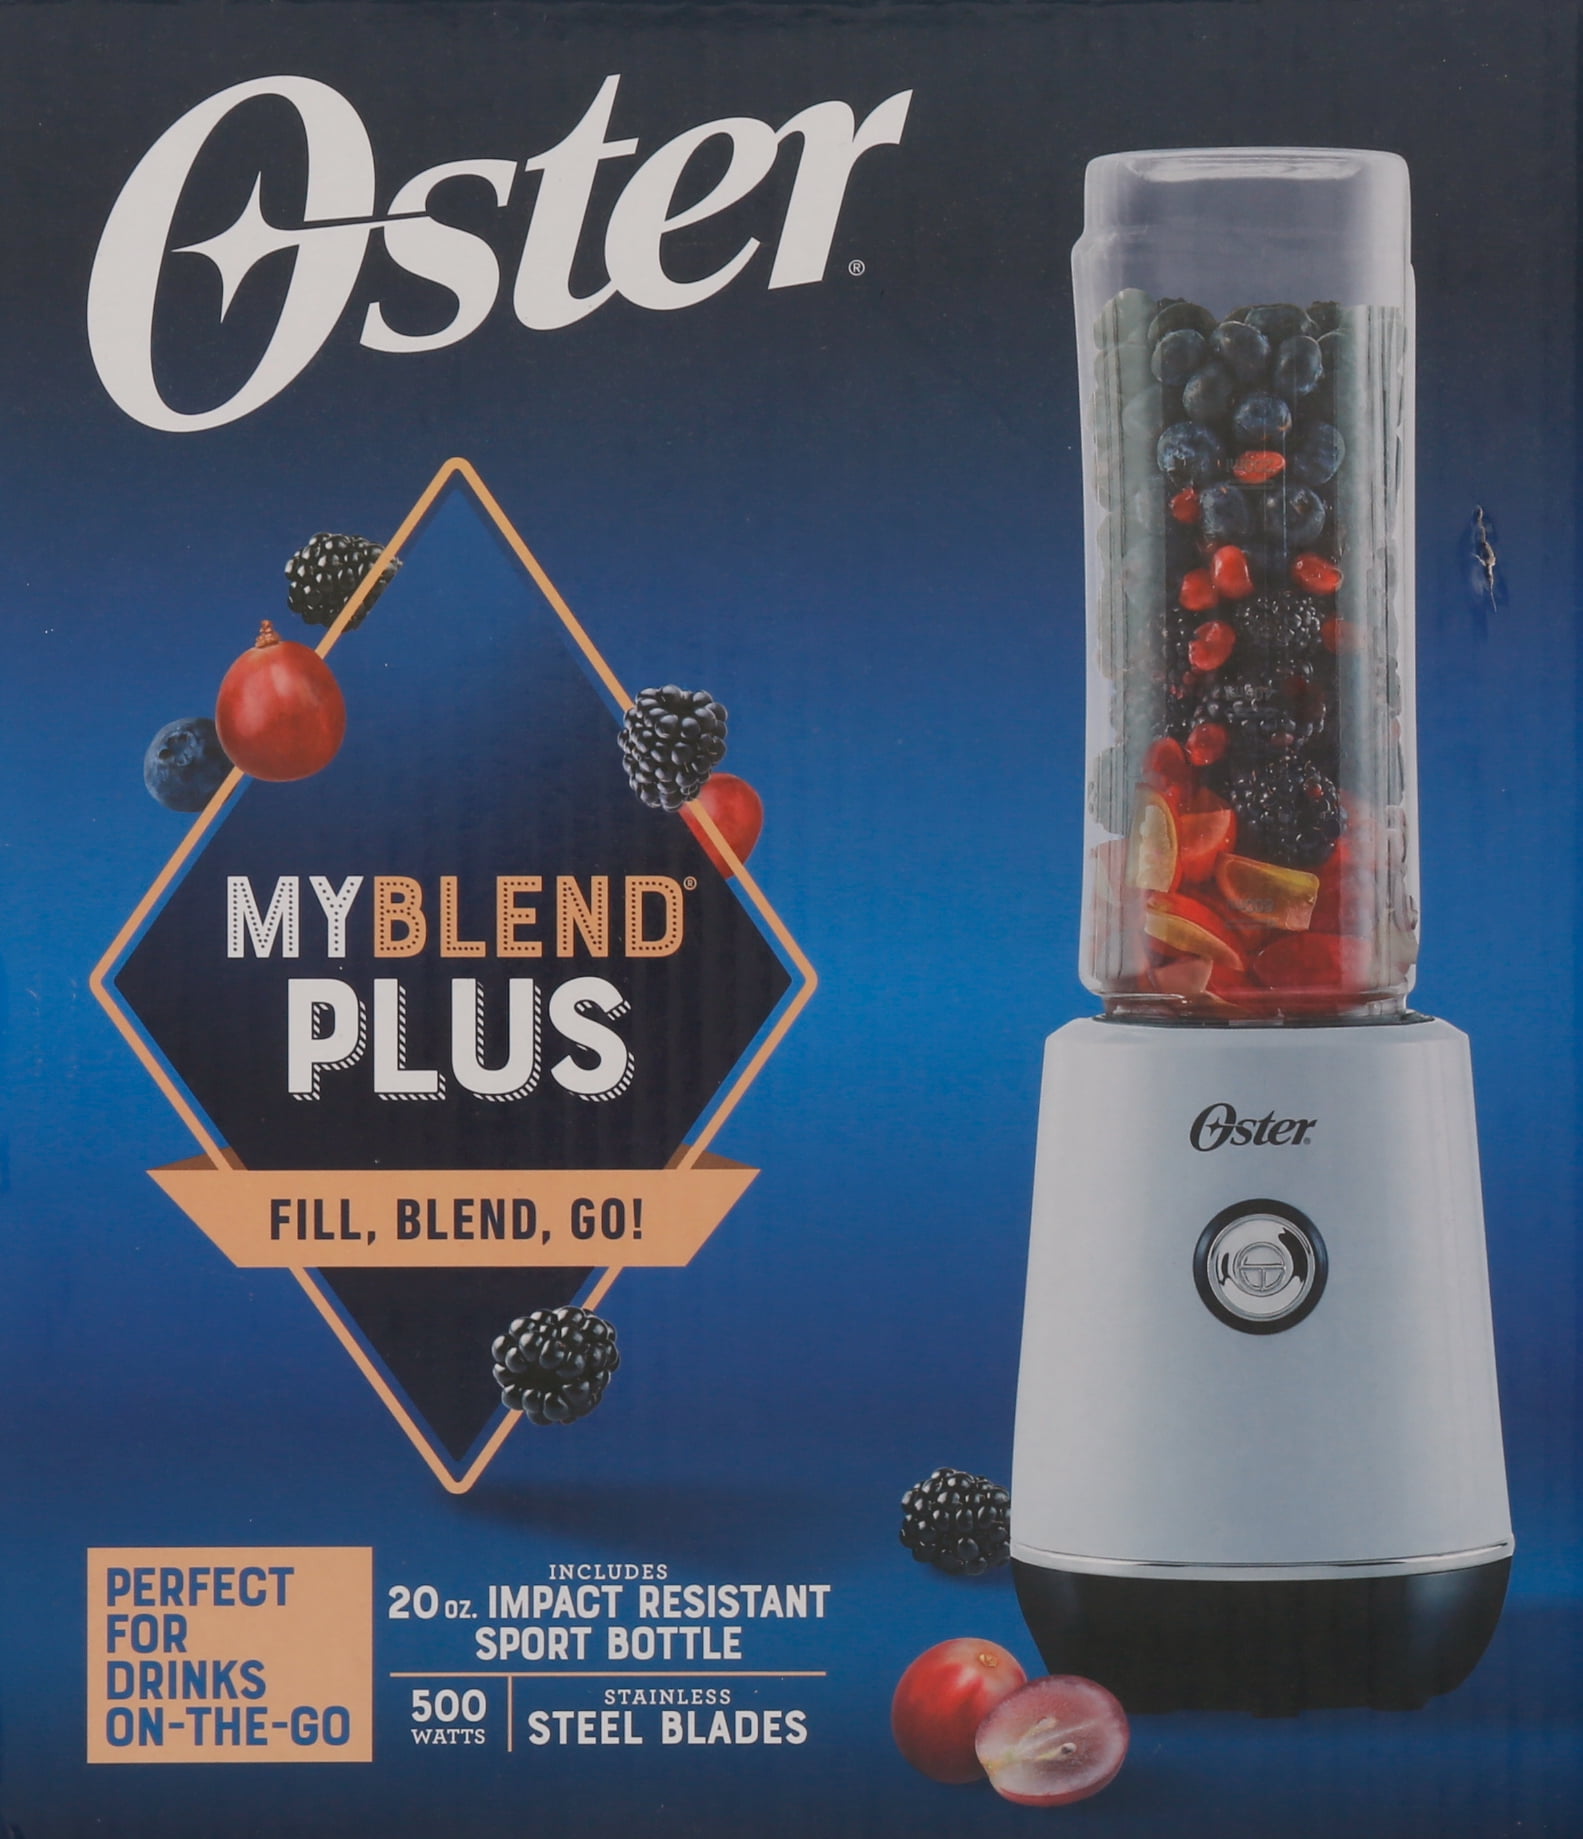 Oster® MyBlend Personal Blender + FREE Sports Bottle - Oster Philippines